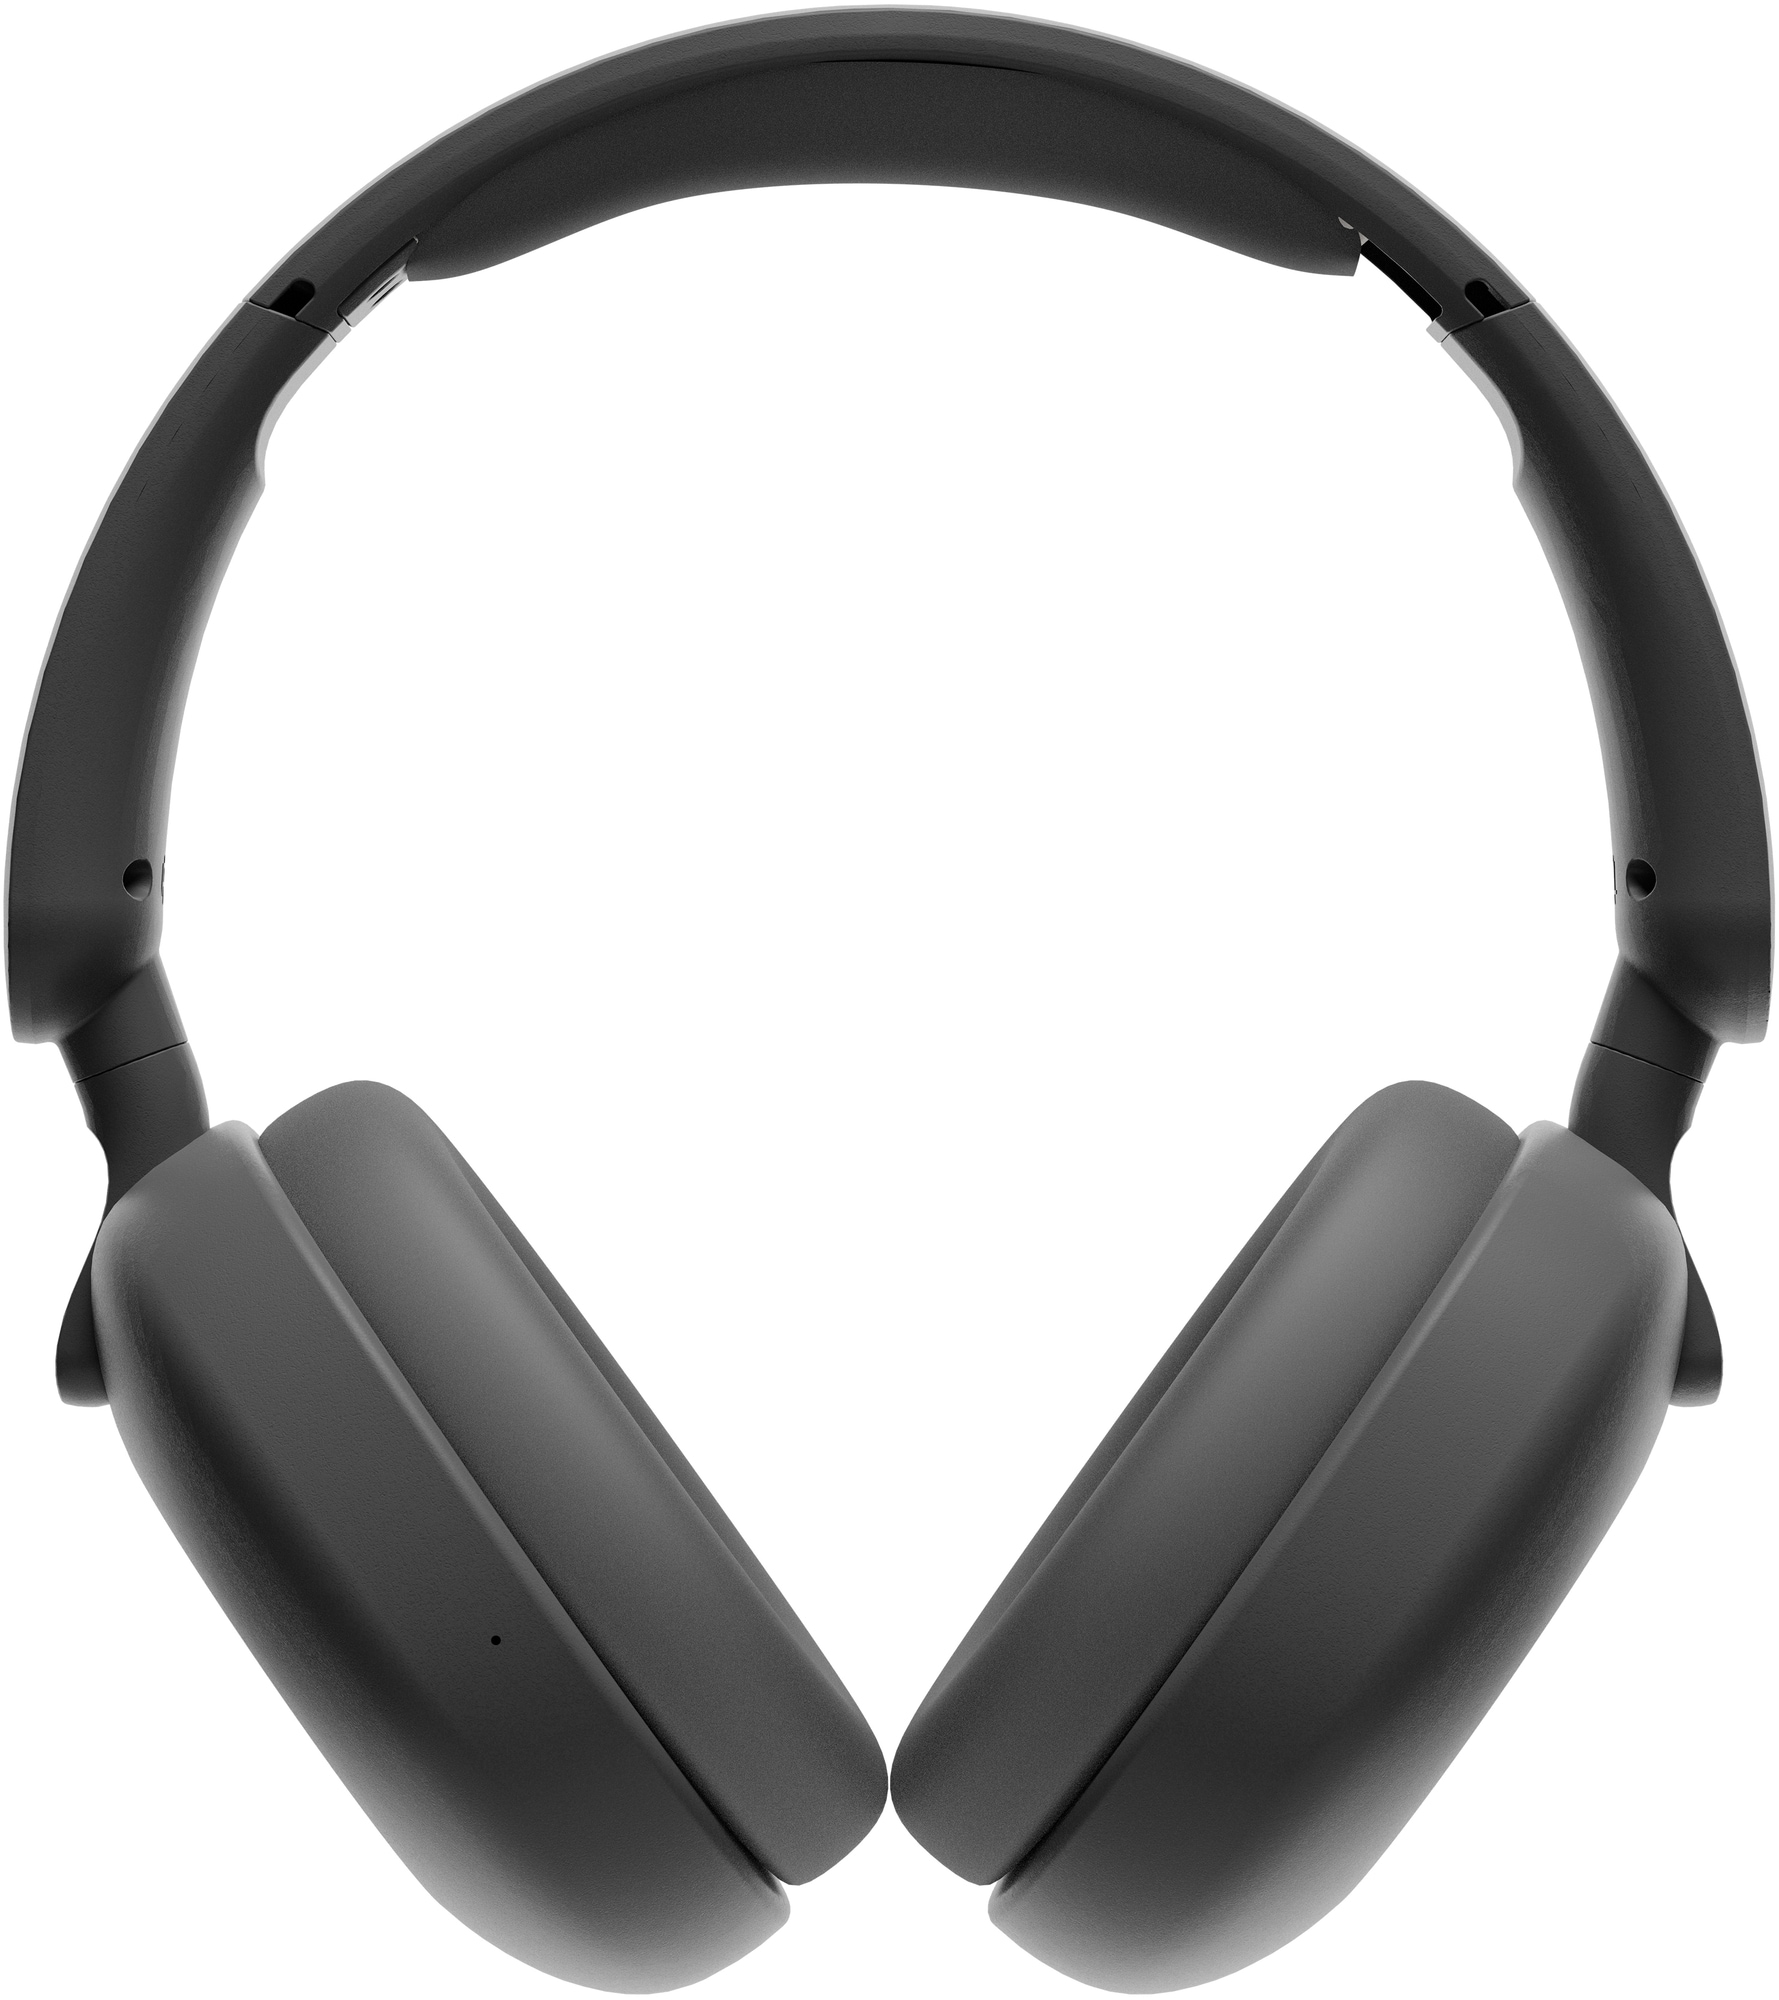 Sudio K2 trådlösa around-ear hörlurar (svart) - Elgiganten